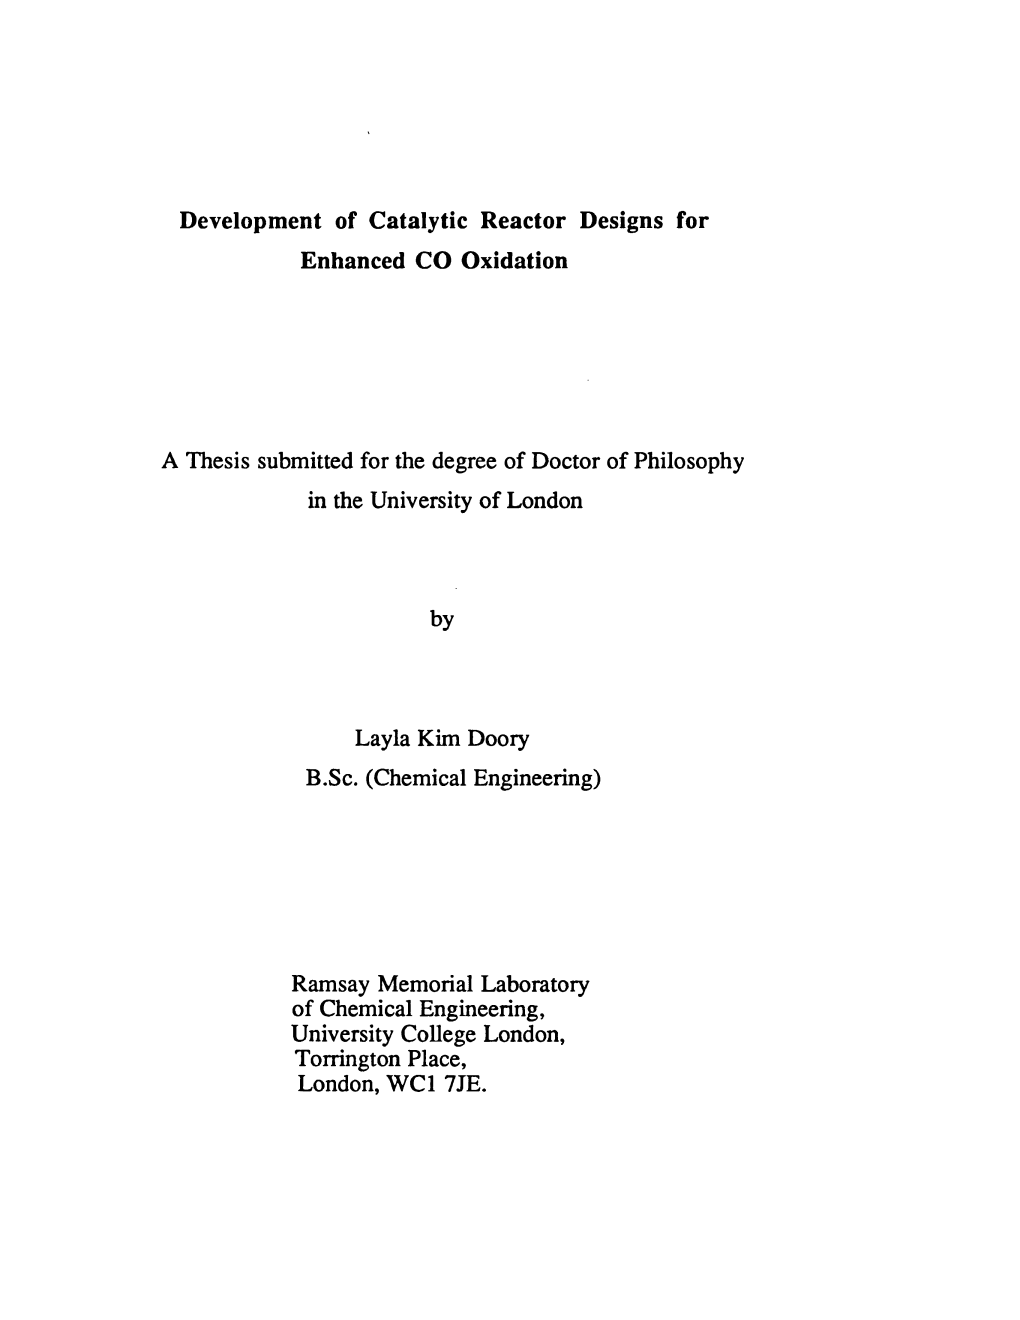 Development of Catalytic Reactor Designs for Enhanced CO Oxidation